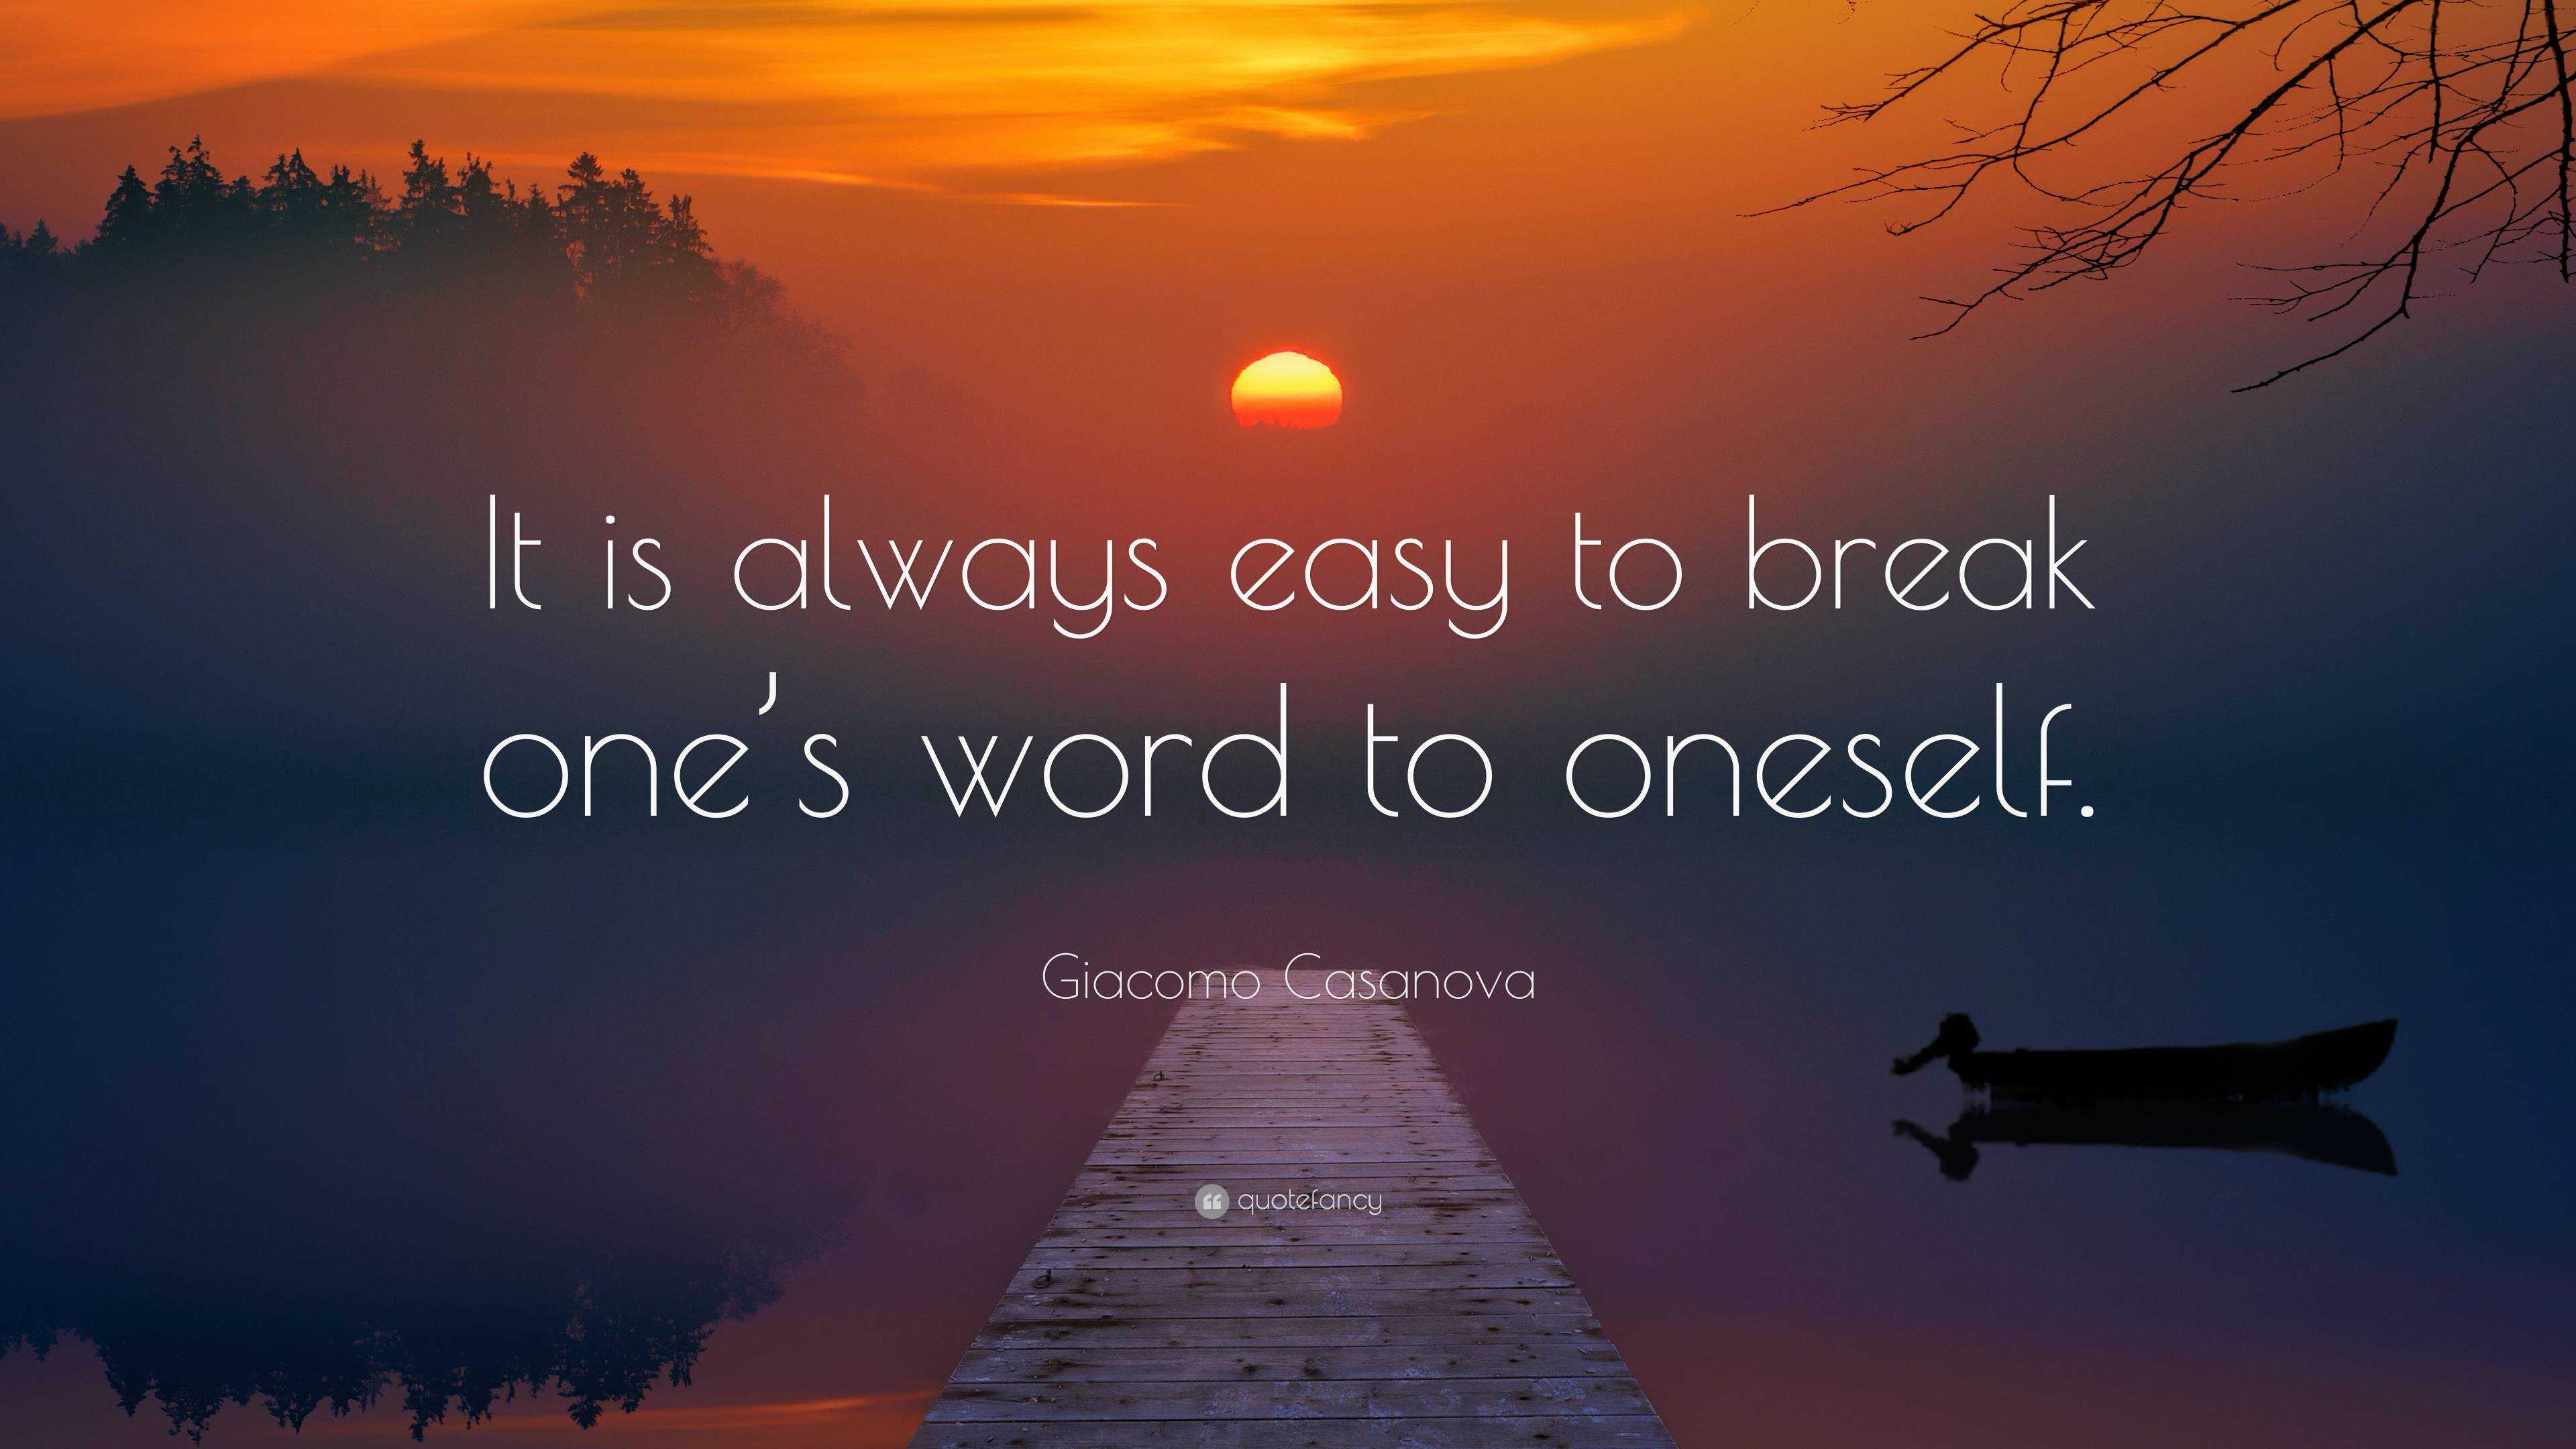 Giacomo Casanova Quote: “It is always easy to break one’s word to oneself.”